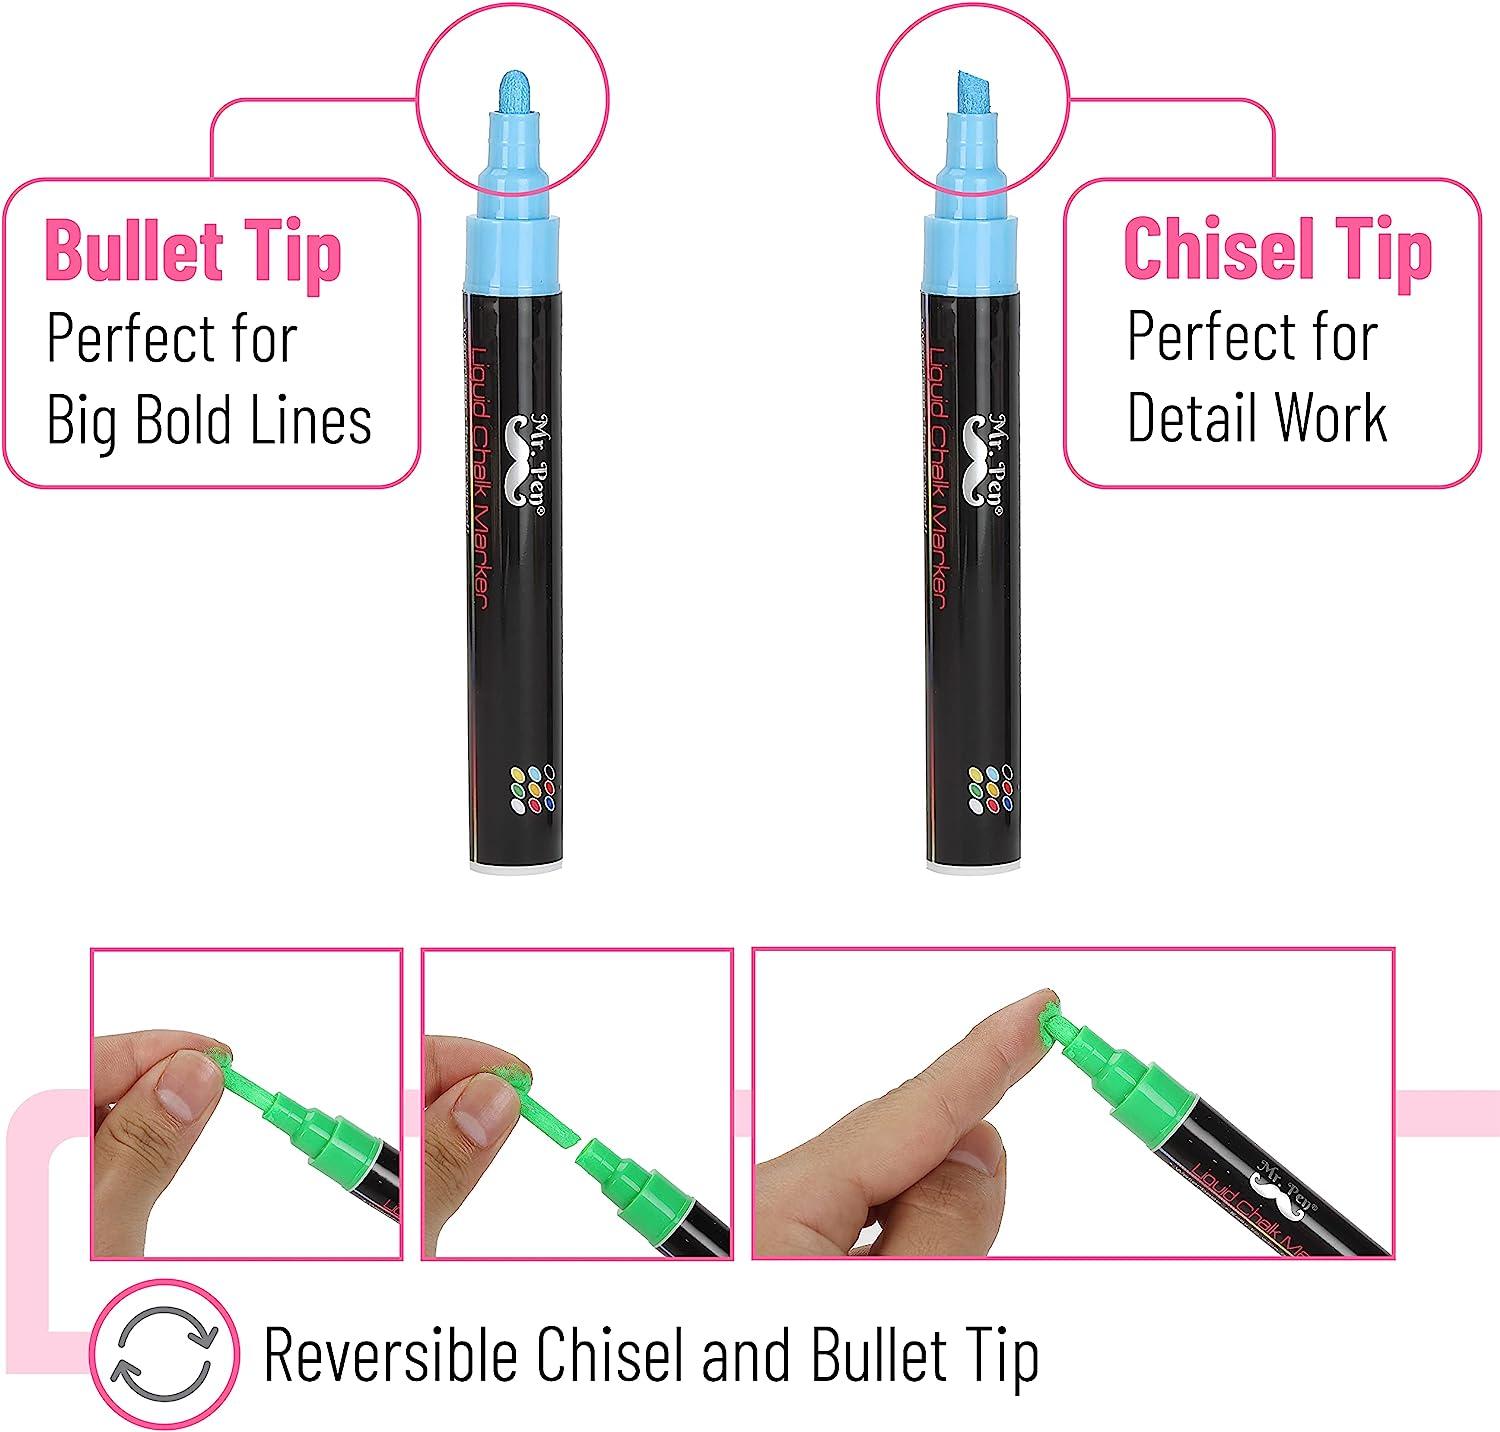 Mr Pen Liquid Chalk Marker Pen for Chalkboards Signs Windows Green Set Of 4